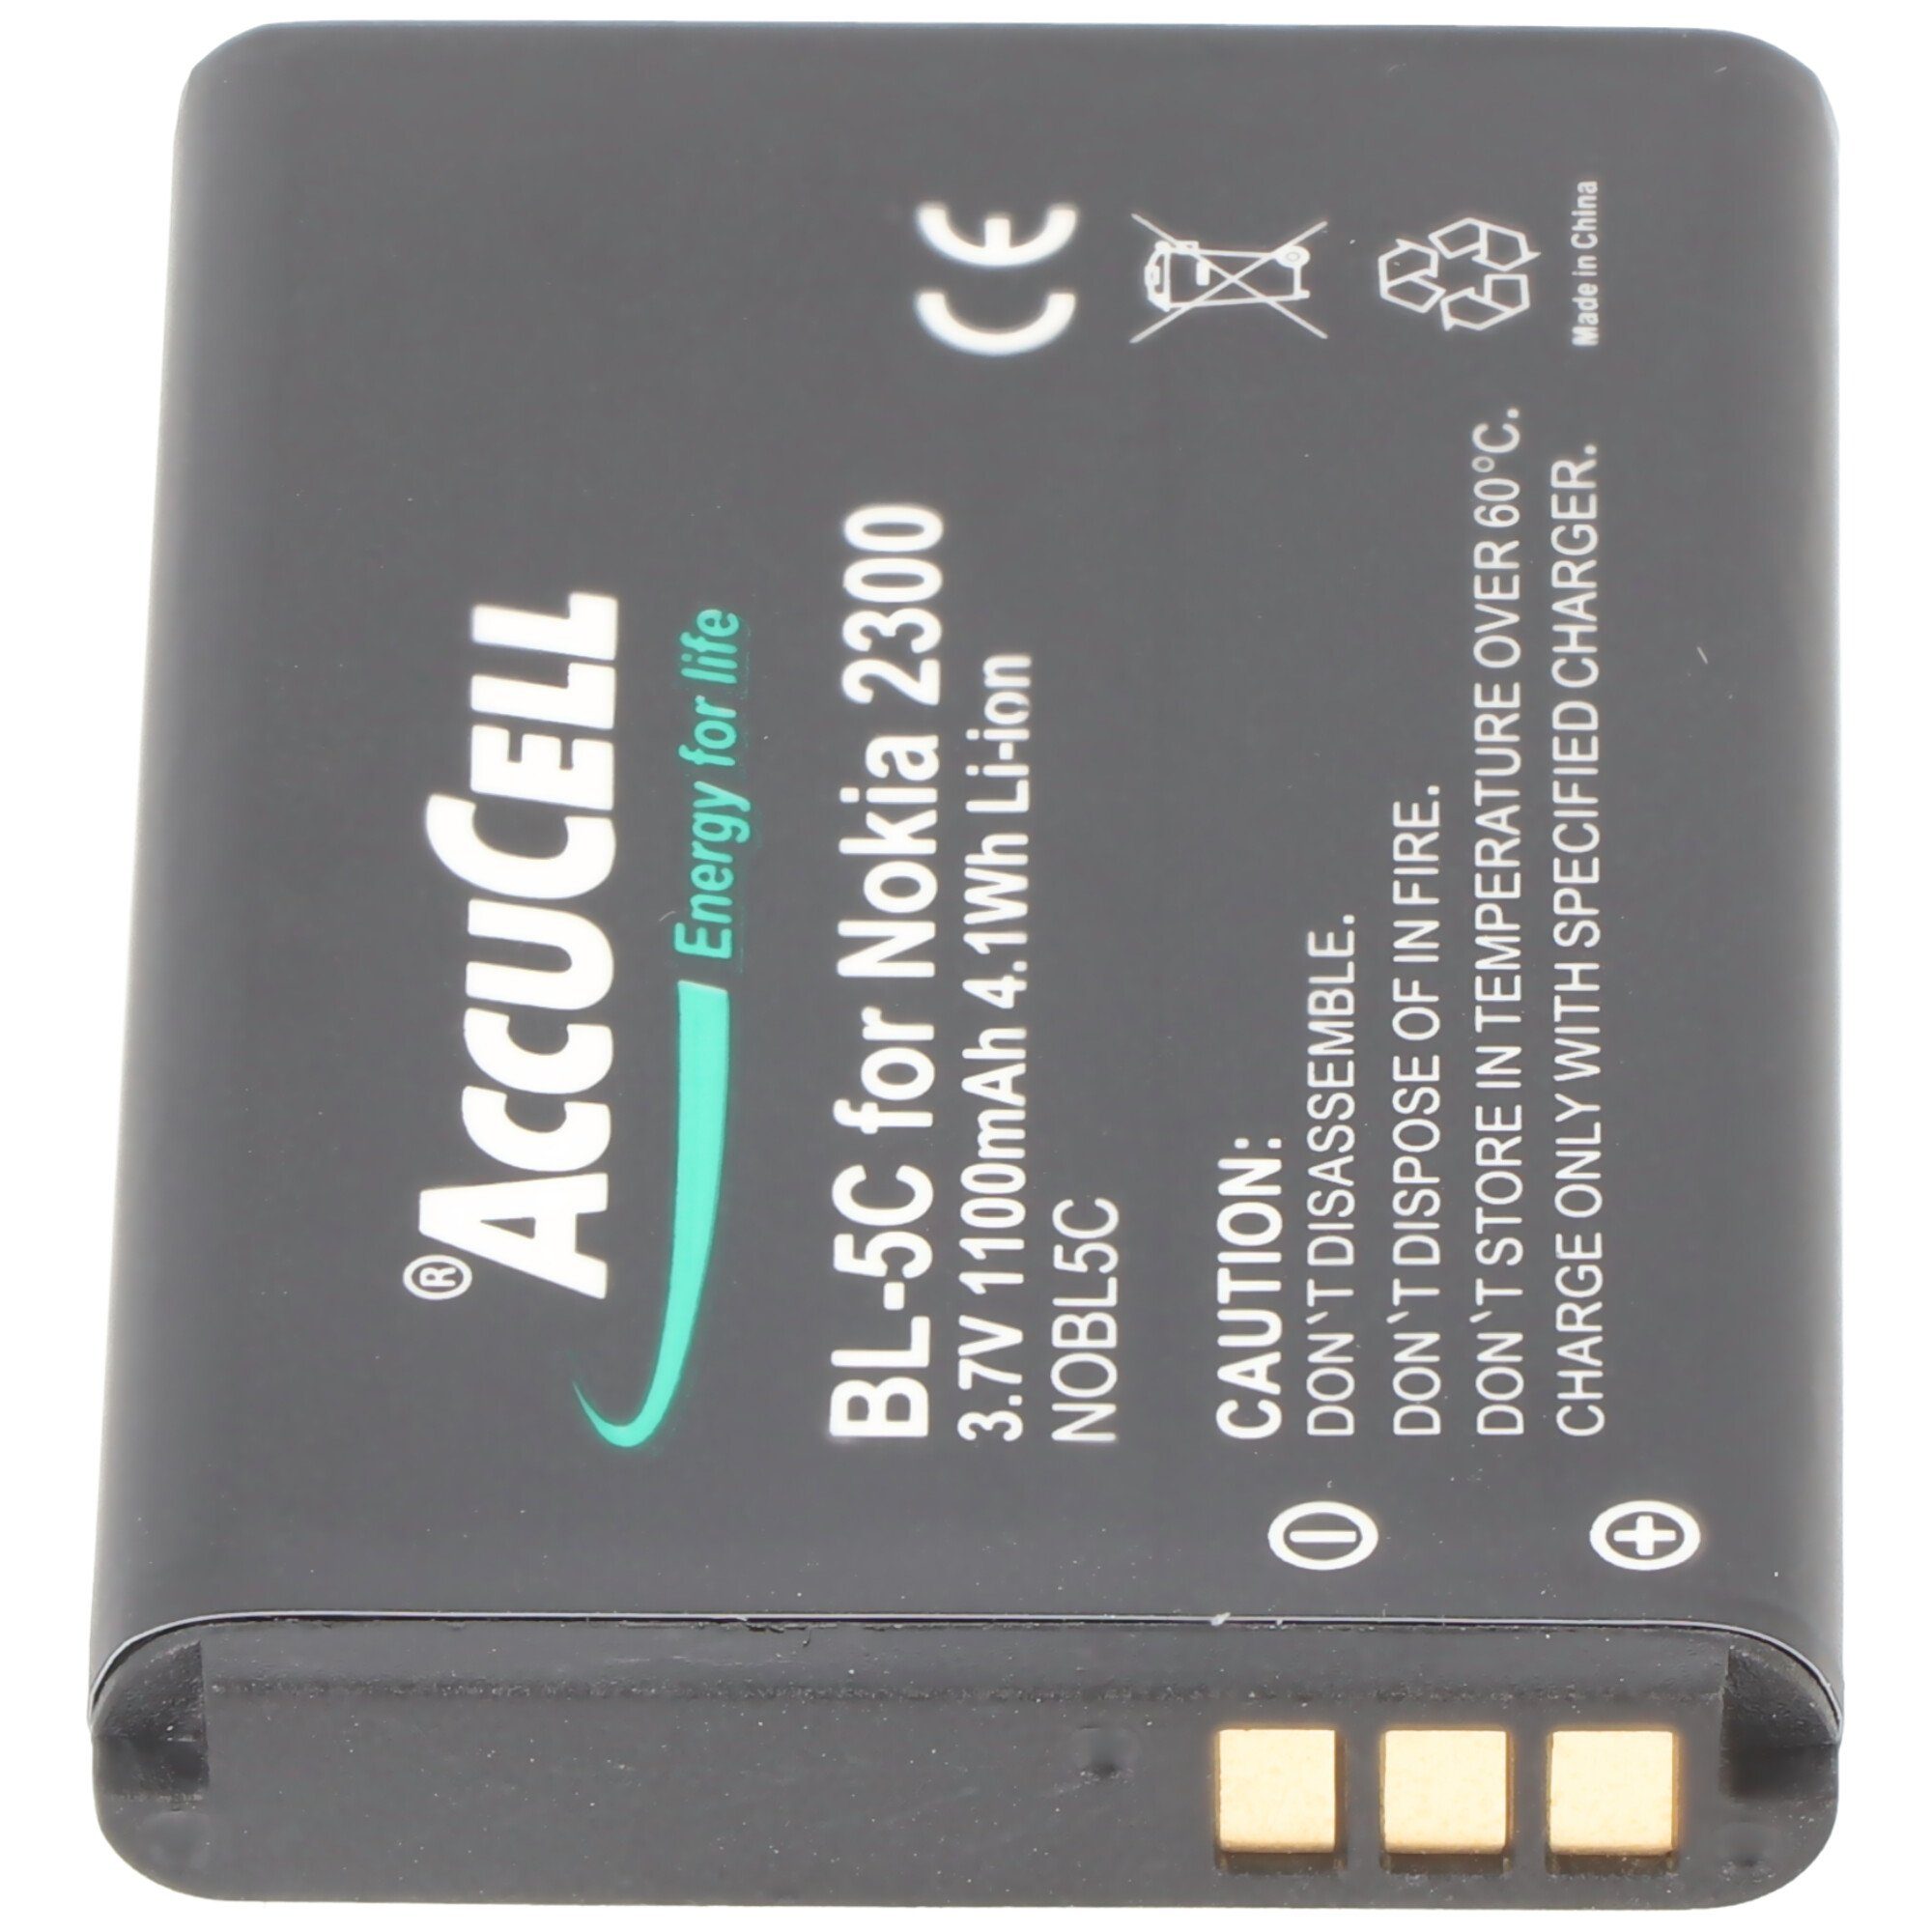 AccuCell Akku 1100mAh by Li-ion Primo für Battery Akku 3.7VDC passend Doro 4,1Wh RC